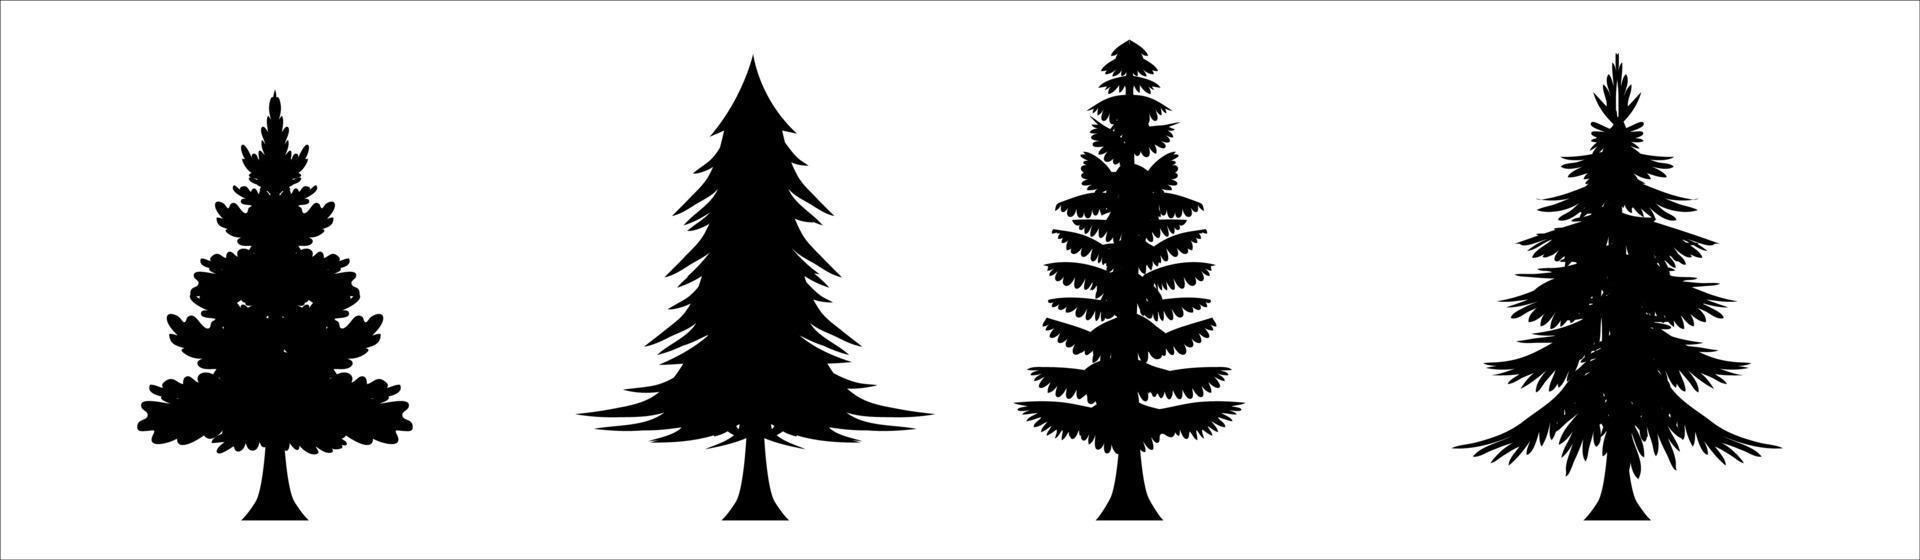 Christmas trees, vector set